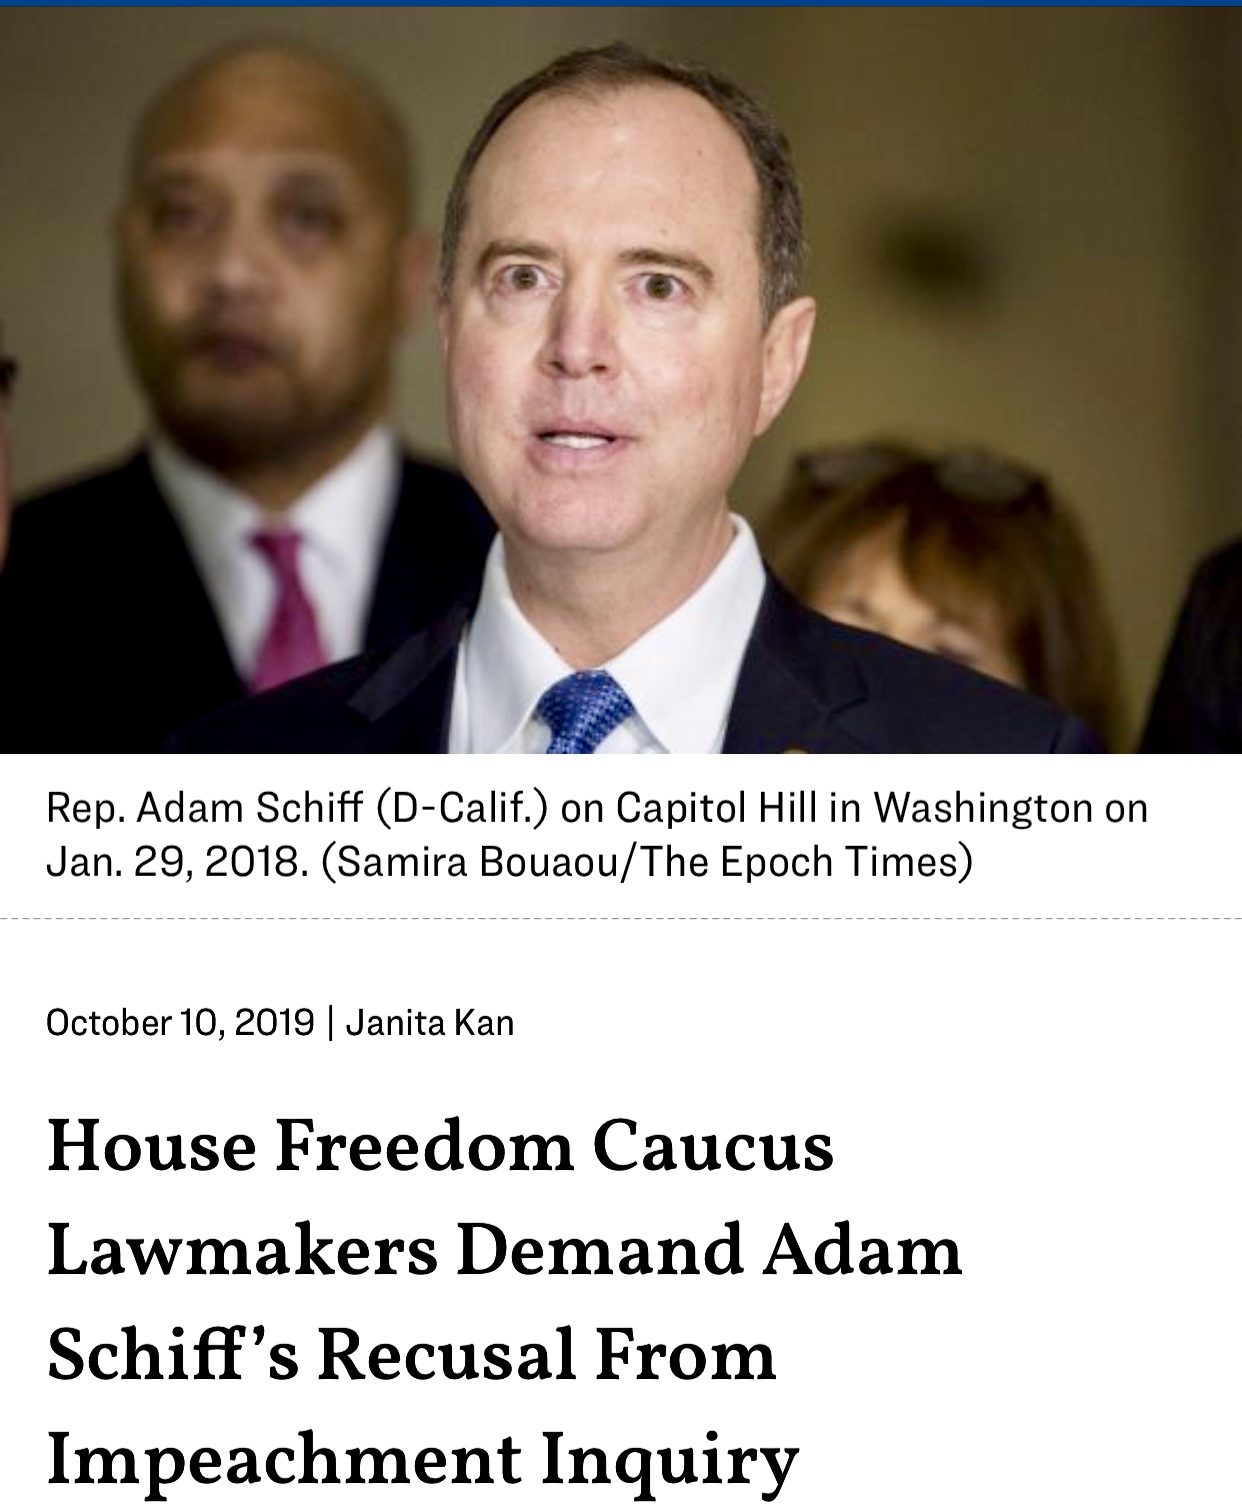 House Freedom Caucus Demands Adam Schiff’s Recusal ~ He is A Material Fact Witness